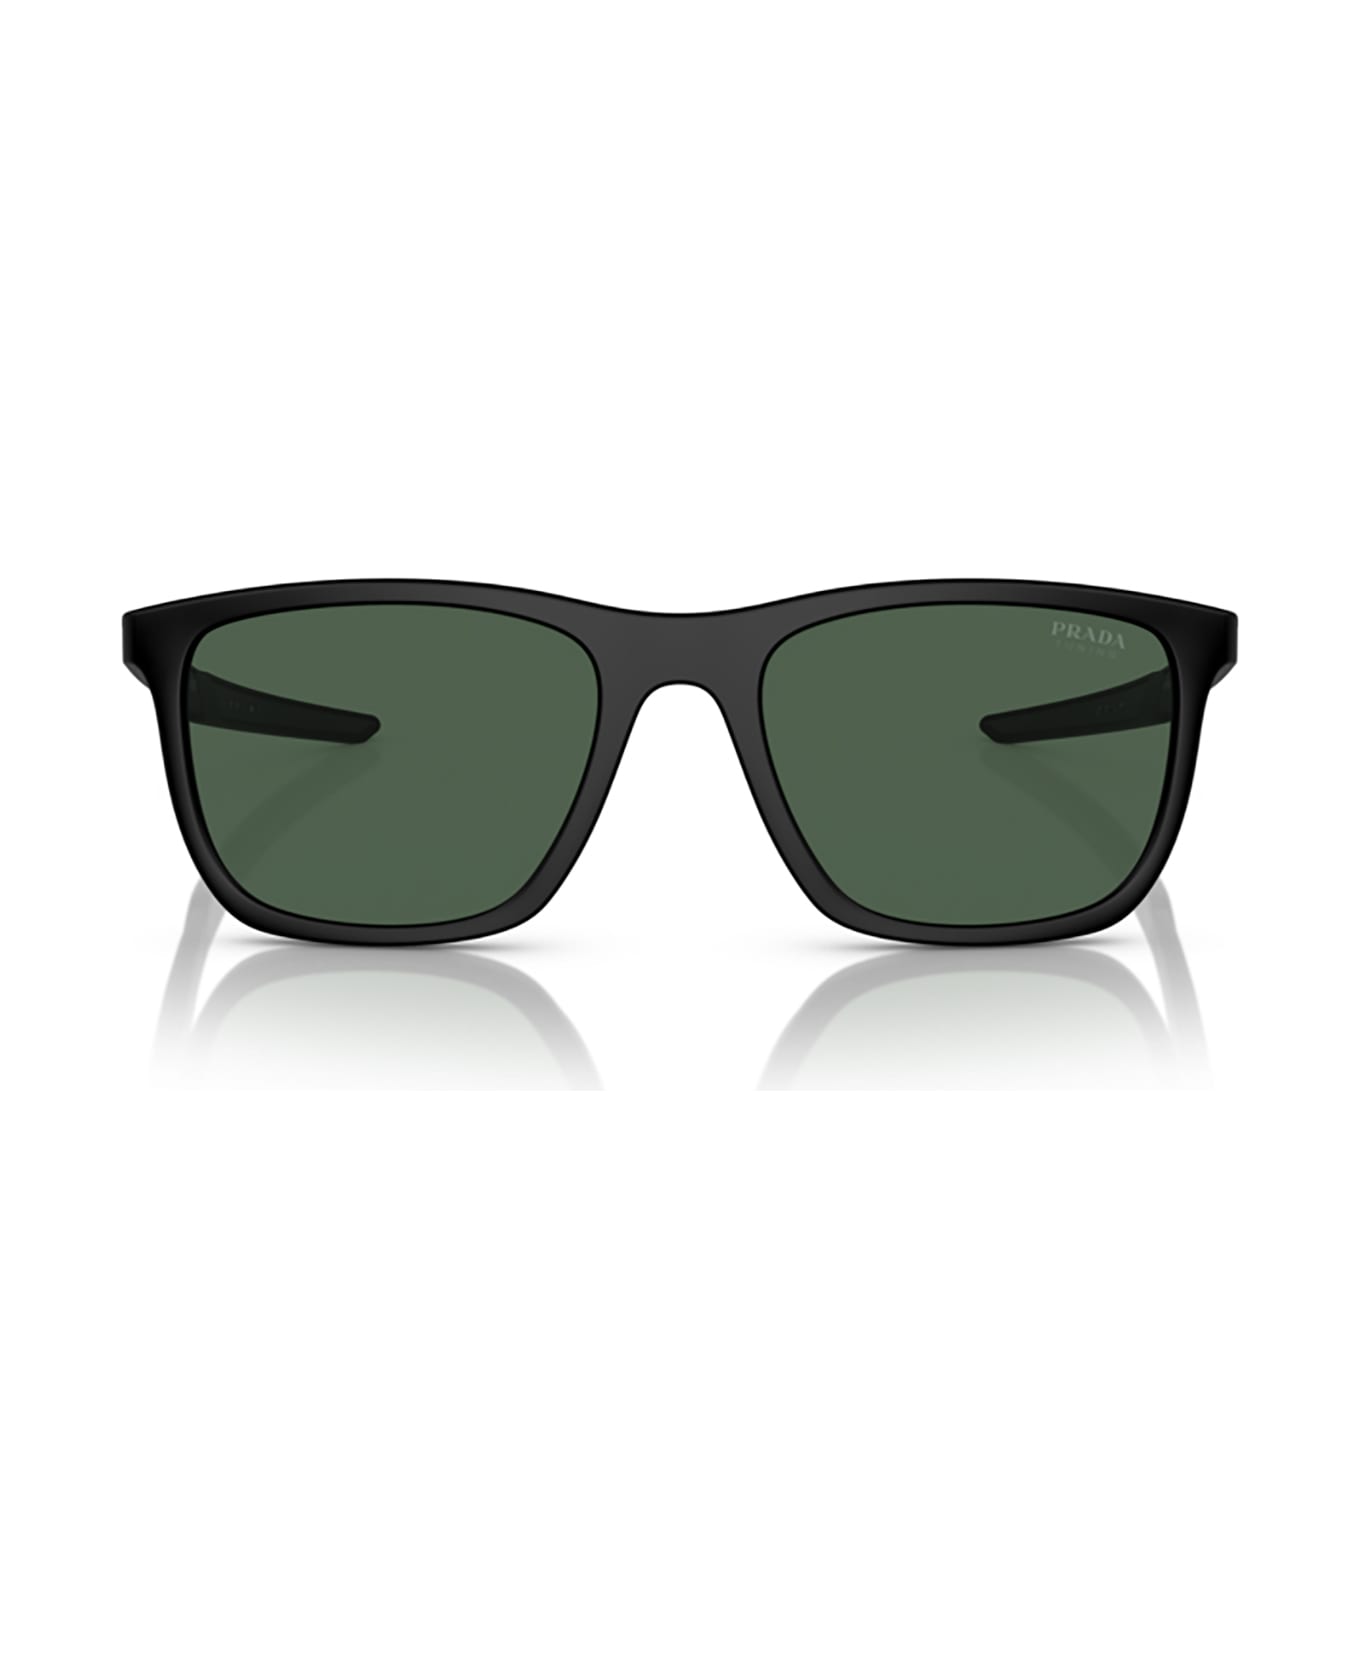 Prada Linea Rossa Ps 10ws Matte Black Sunglasses - Matte Black